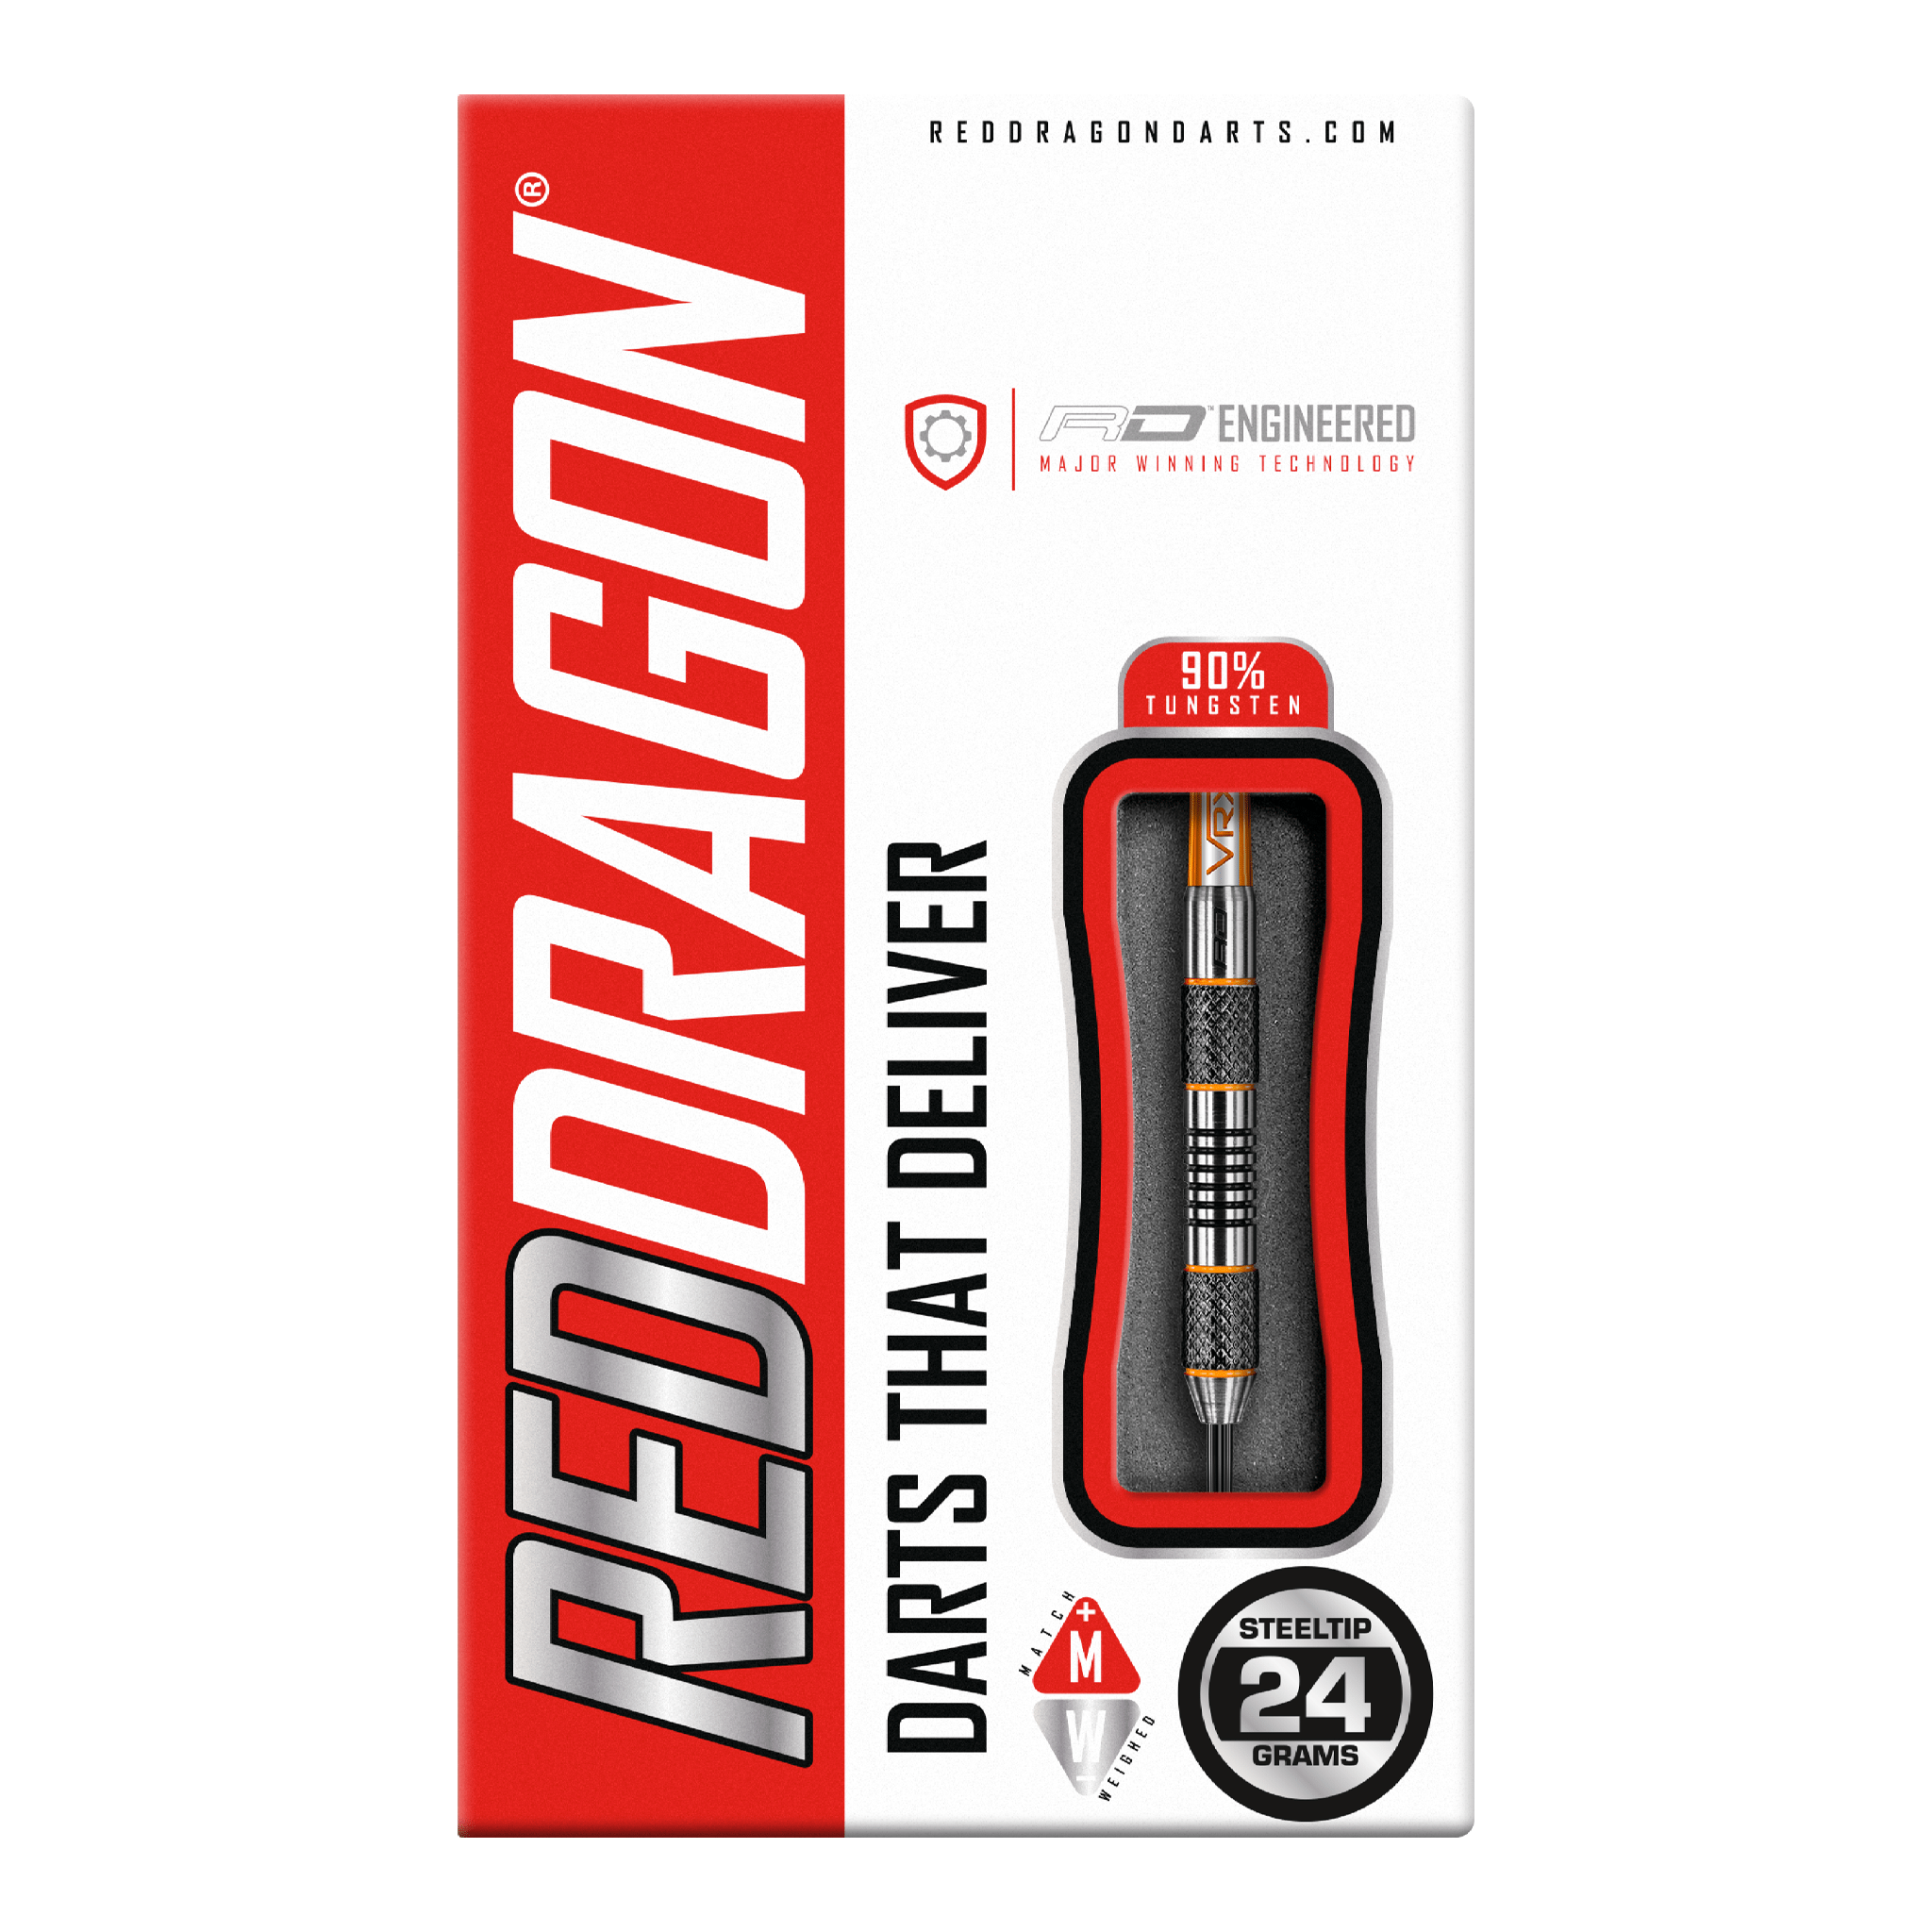 Red Dragon Amberjack 5 - 90% Tungsten Steel Tip Darts 24 Grams Darts